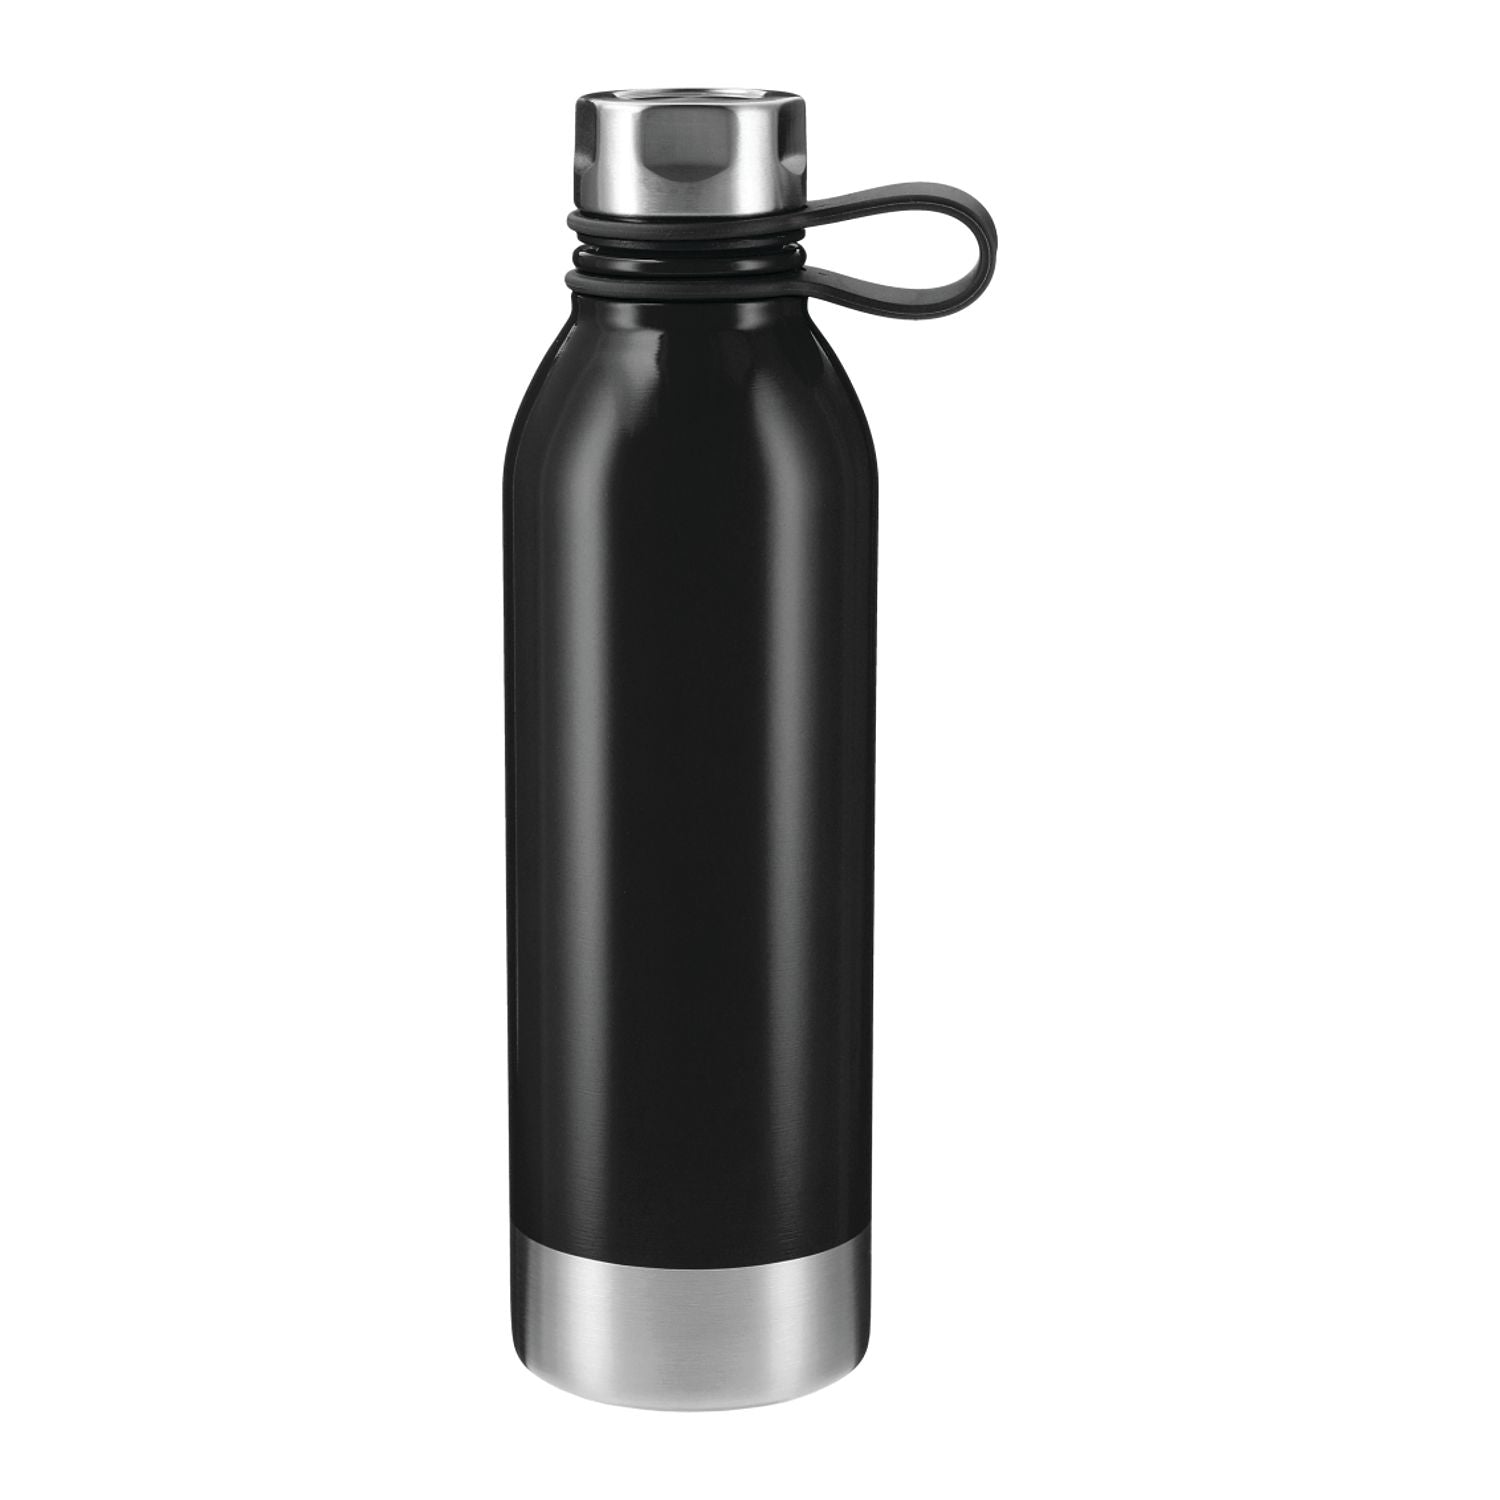 25oz Perth Single-Walled Stainless Steel Sports Water Bottle in black